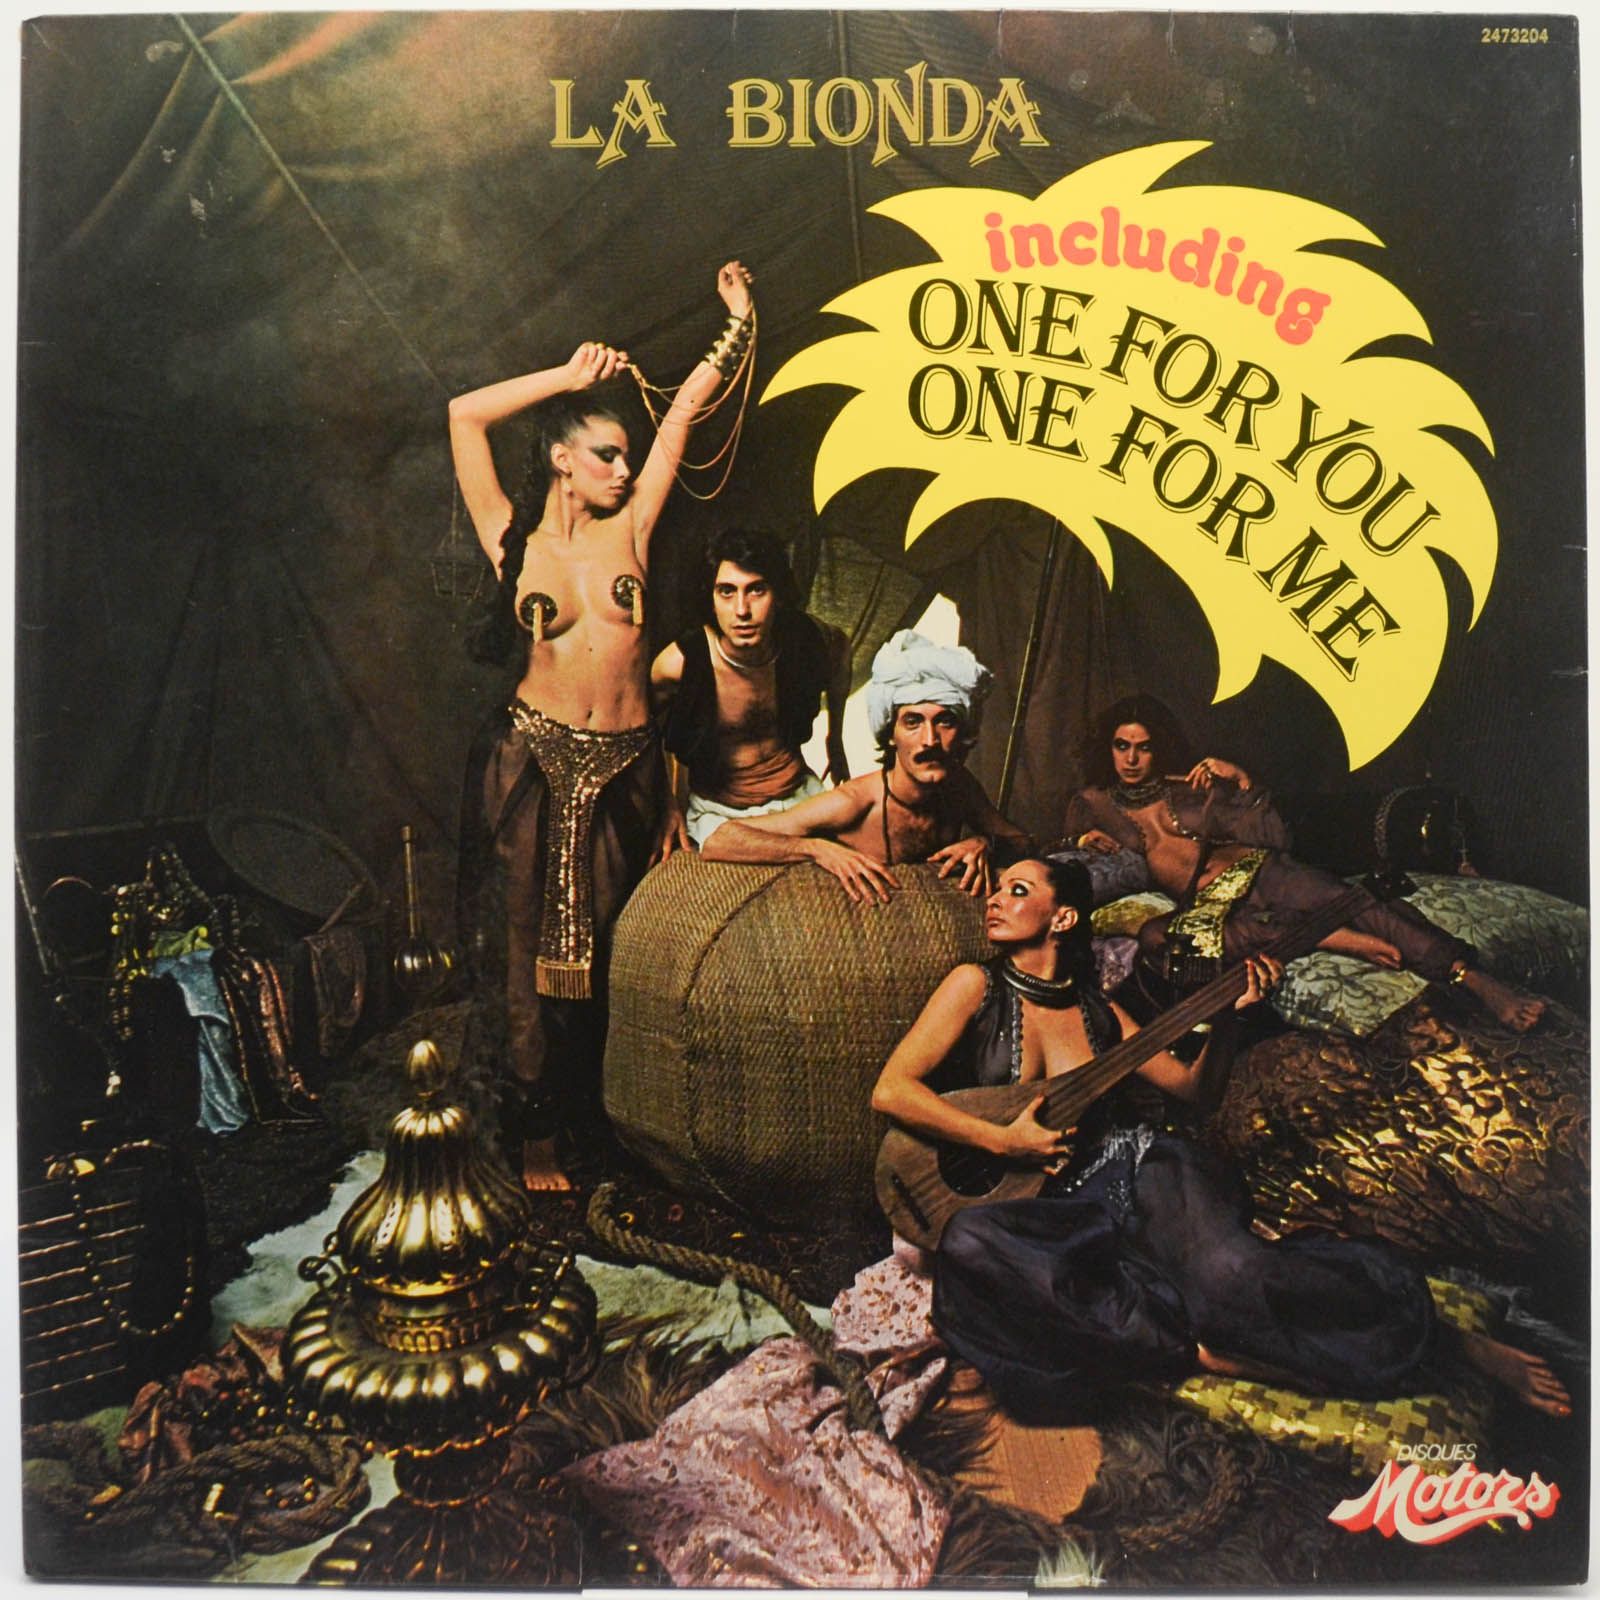 La Bionda — La Bionda (France), 1978